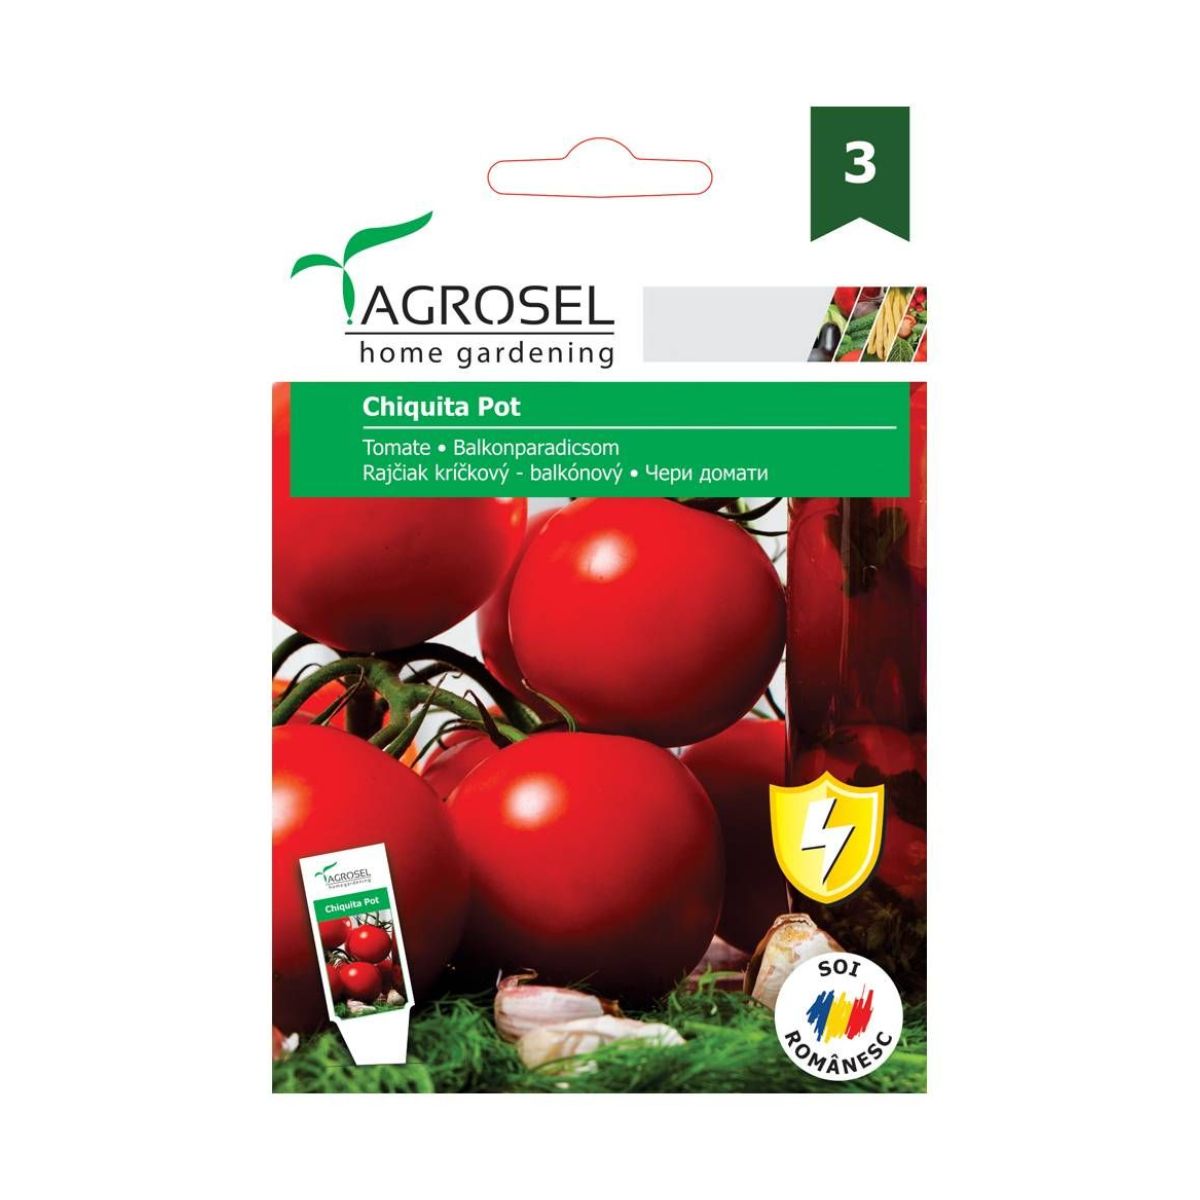 Tomate - Seminte de tomate cherry, Chiquita Pot, 0,75 gr, AGROSEL, hectarul.ro